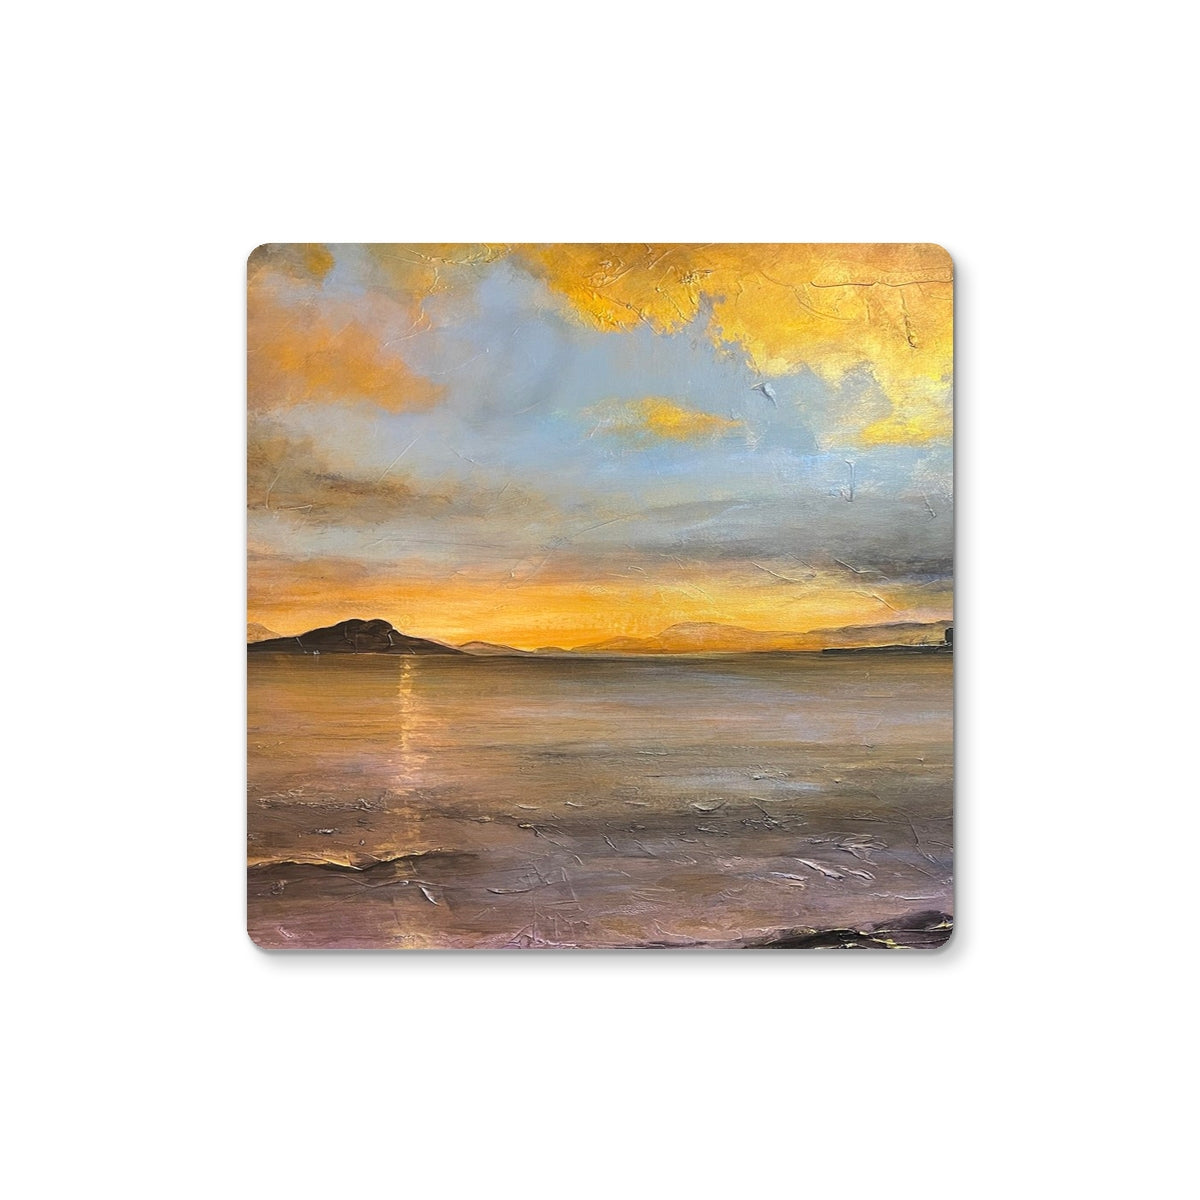 Loch Linnhe Sunset Art Gifts Coaster-Homeware-Scottish Lochs & Mountains Art Gallery-Single Coaster-Paintings, Prints, Homeware, Art Gifts From Scotland By Scottish Artist Kevin Hunter